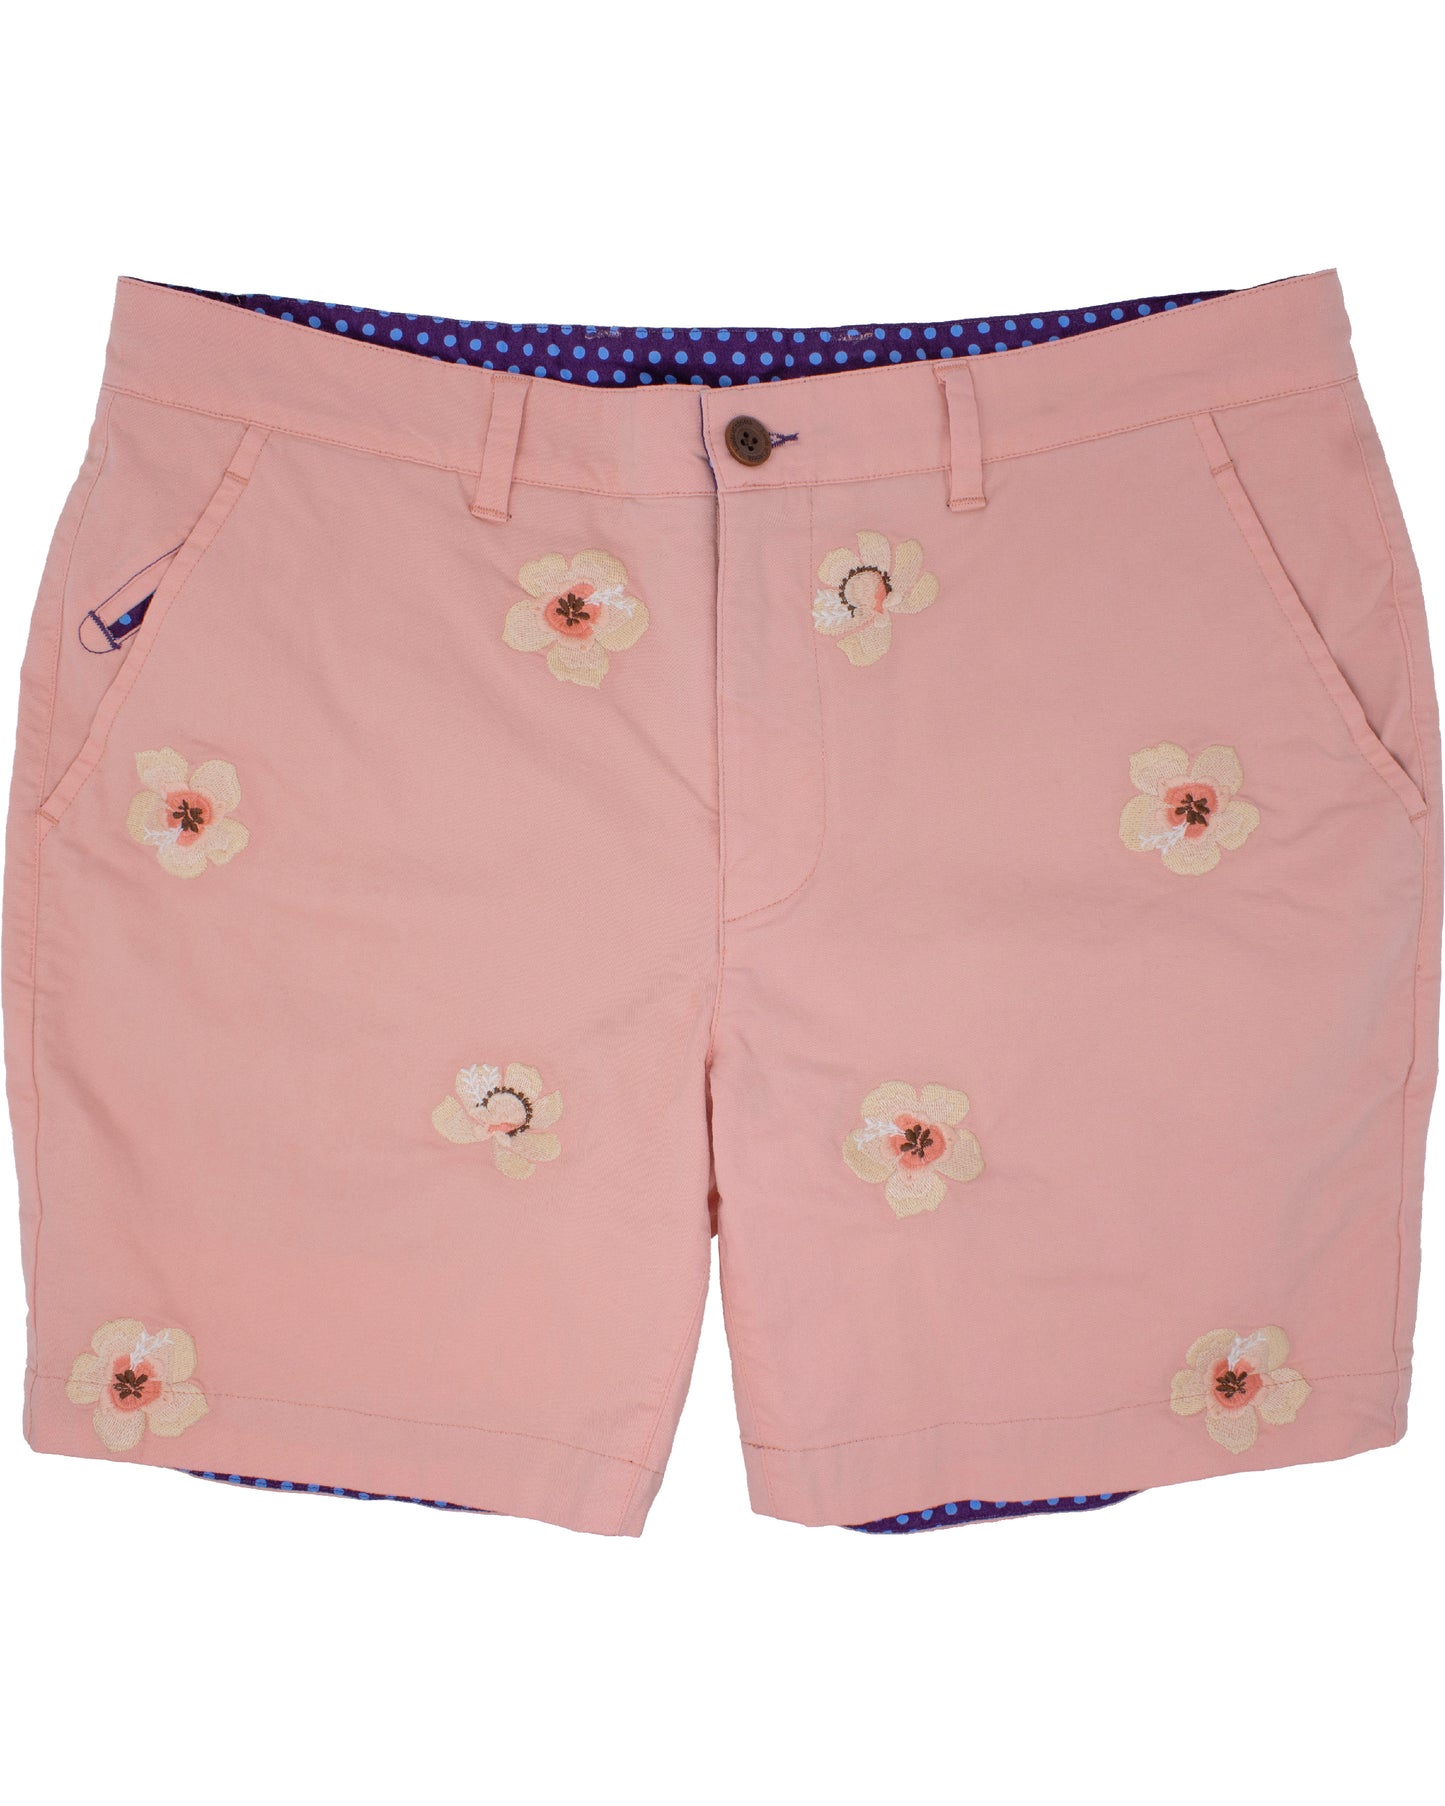 Edward Peach Flower Embroidery Shorts